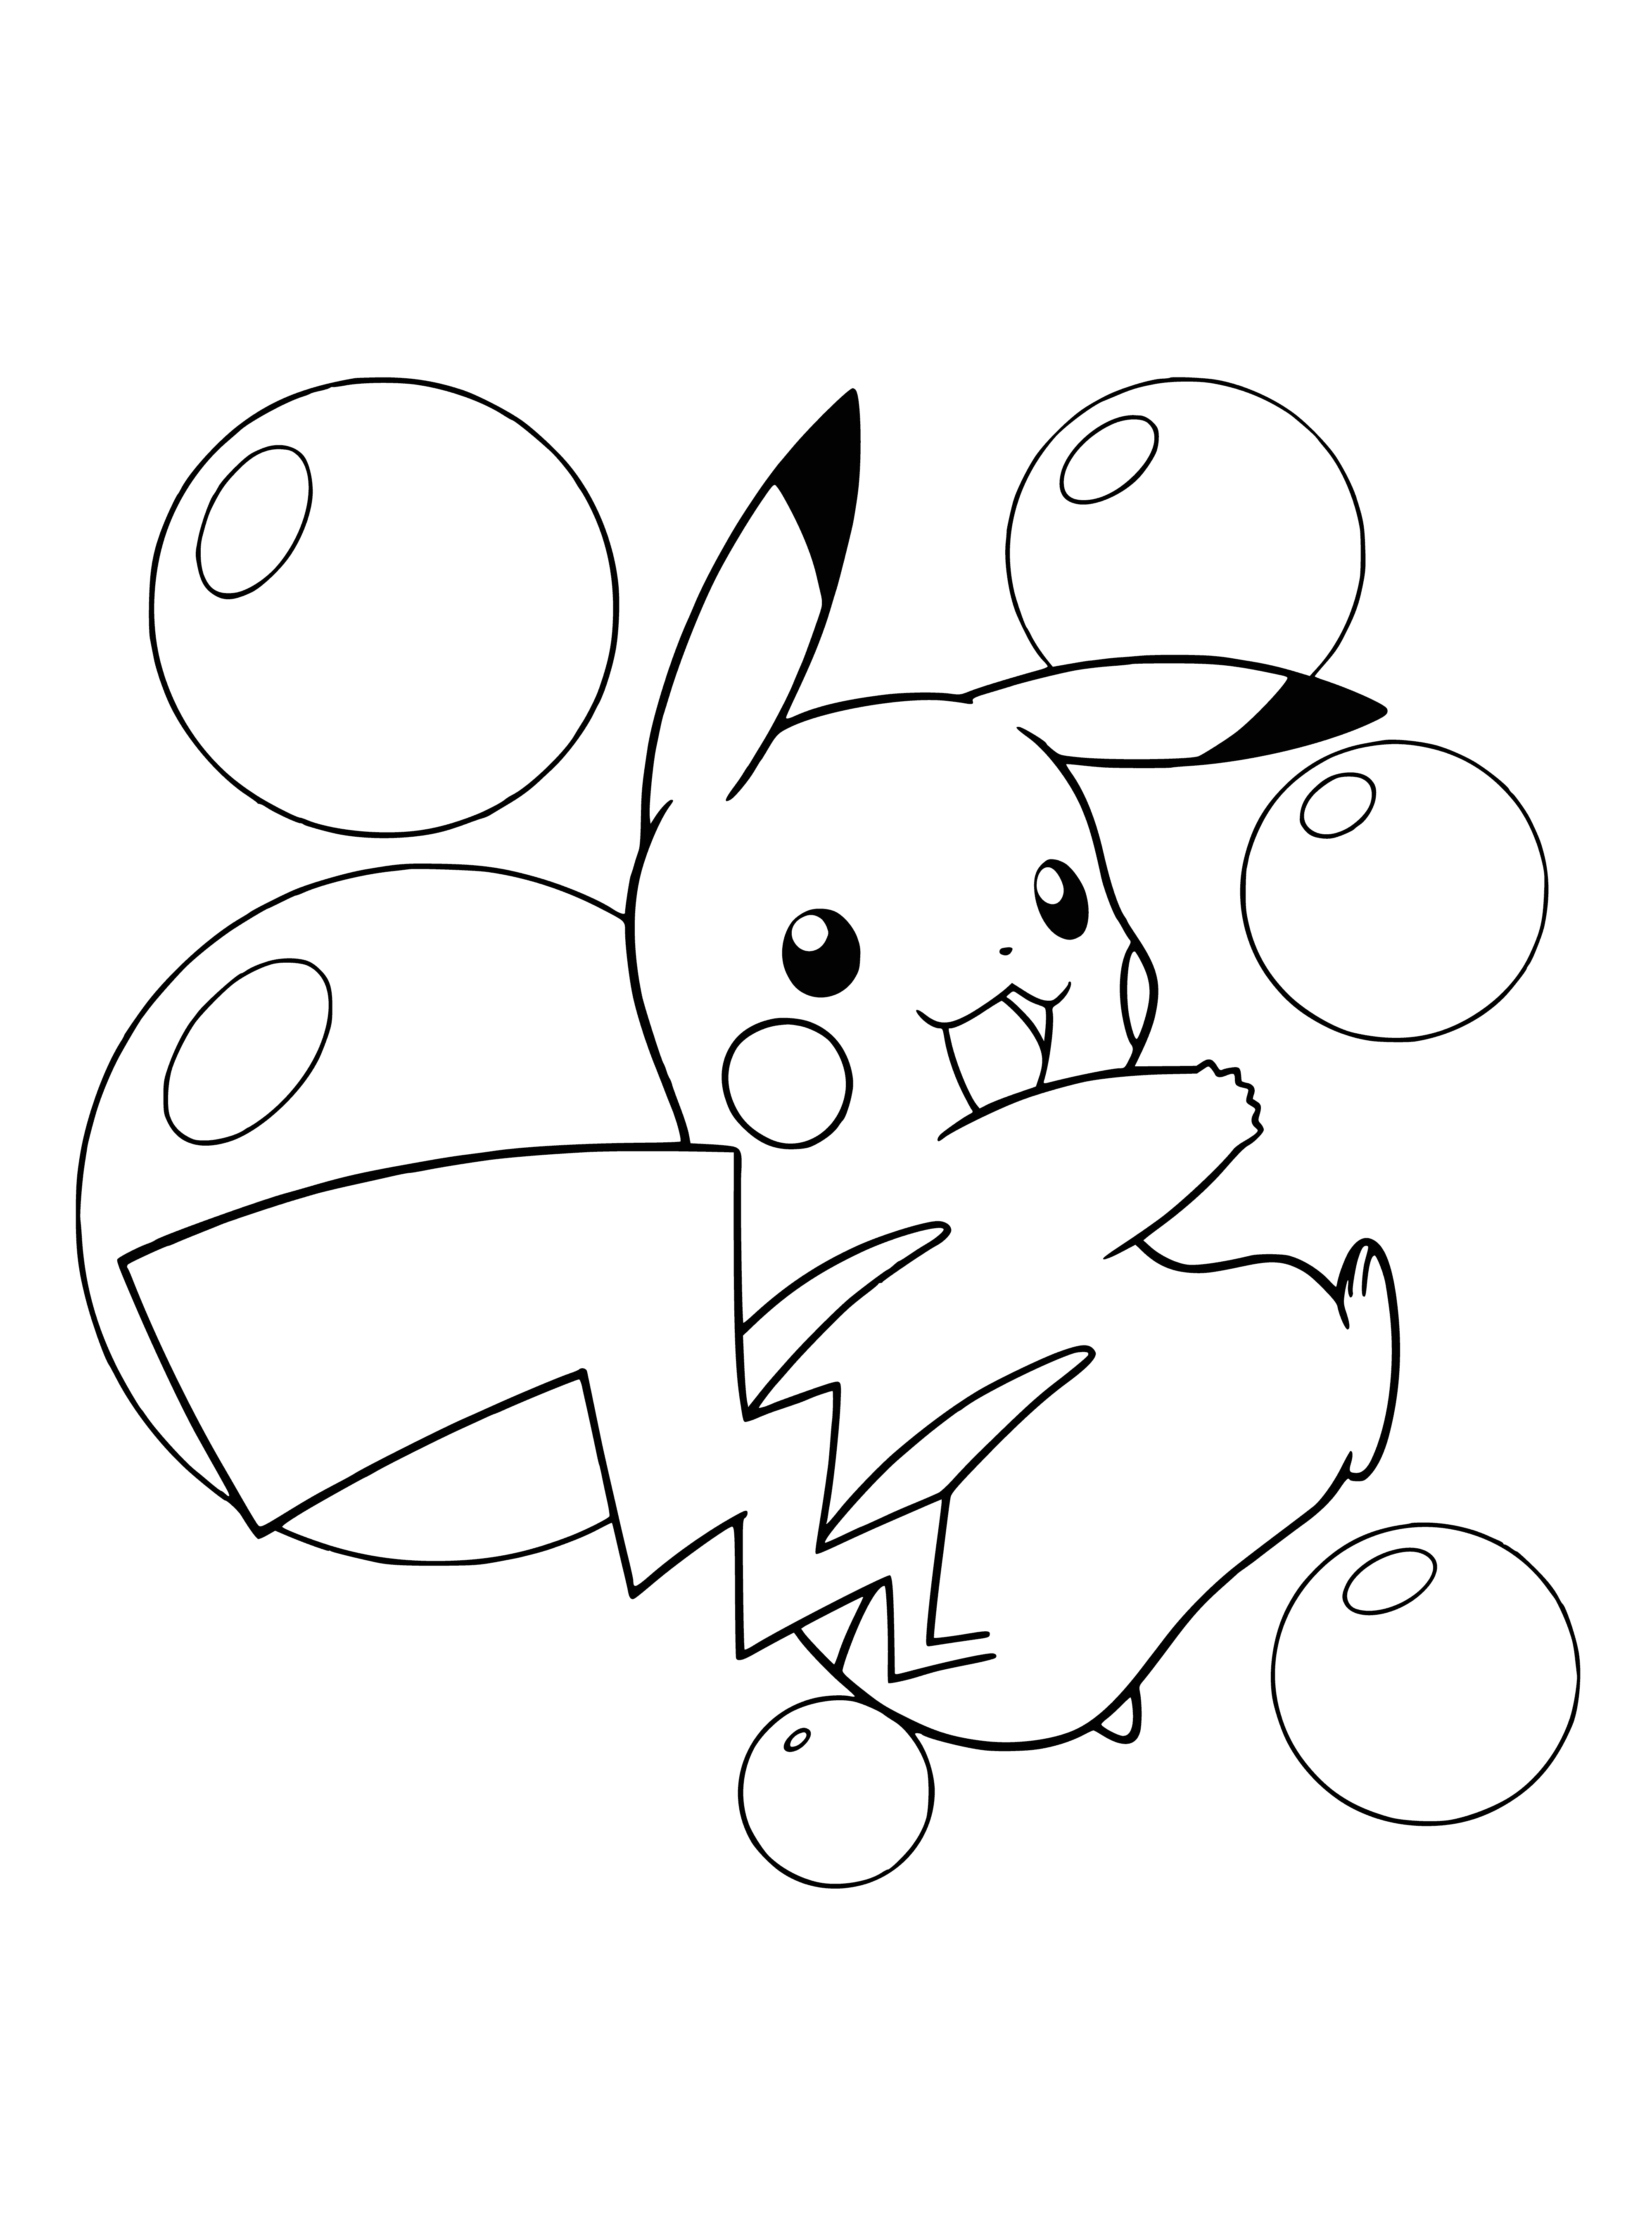 Pikachu coloriage